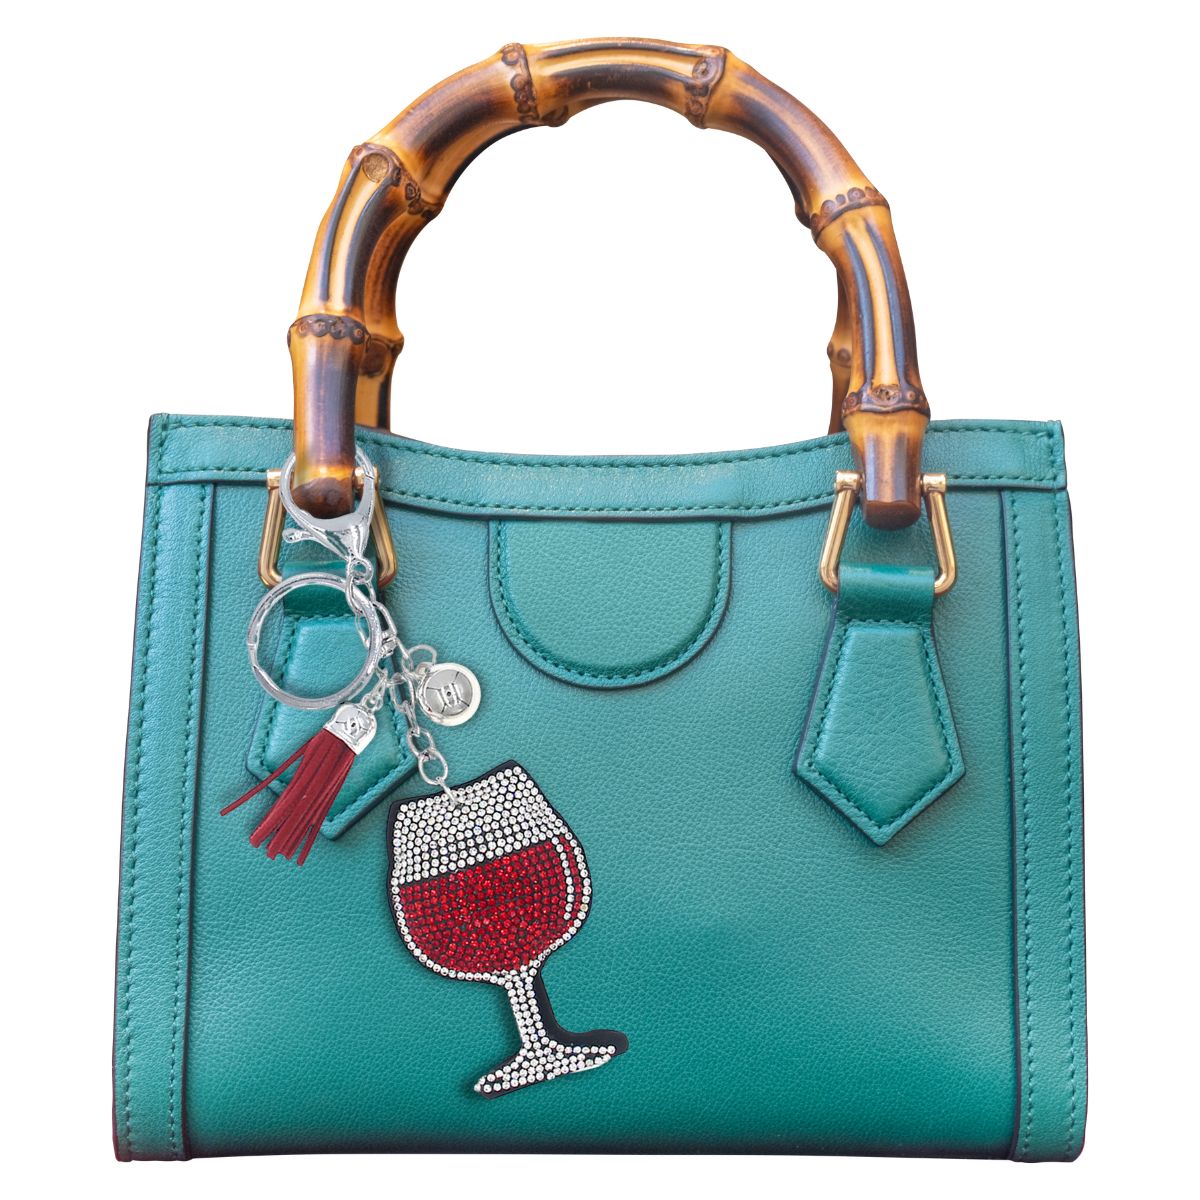 Red Wine Keychain Bag Charm